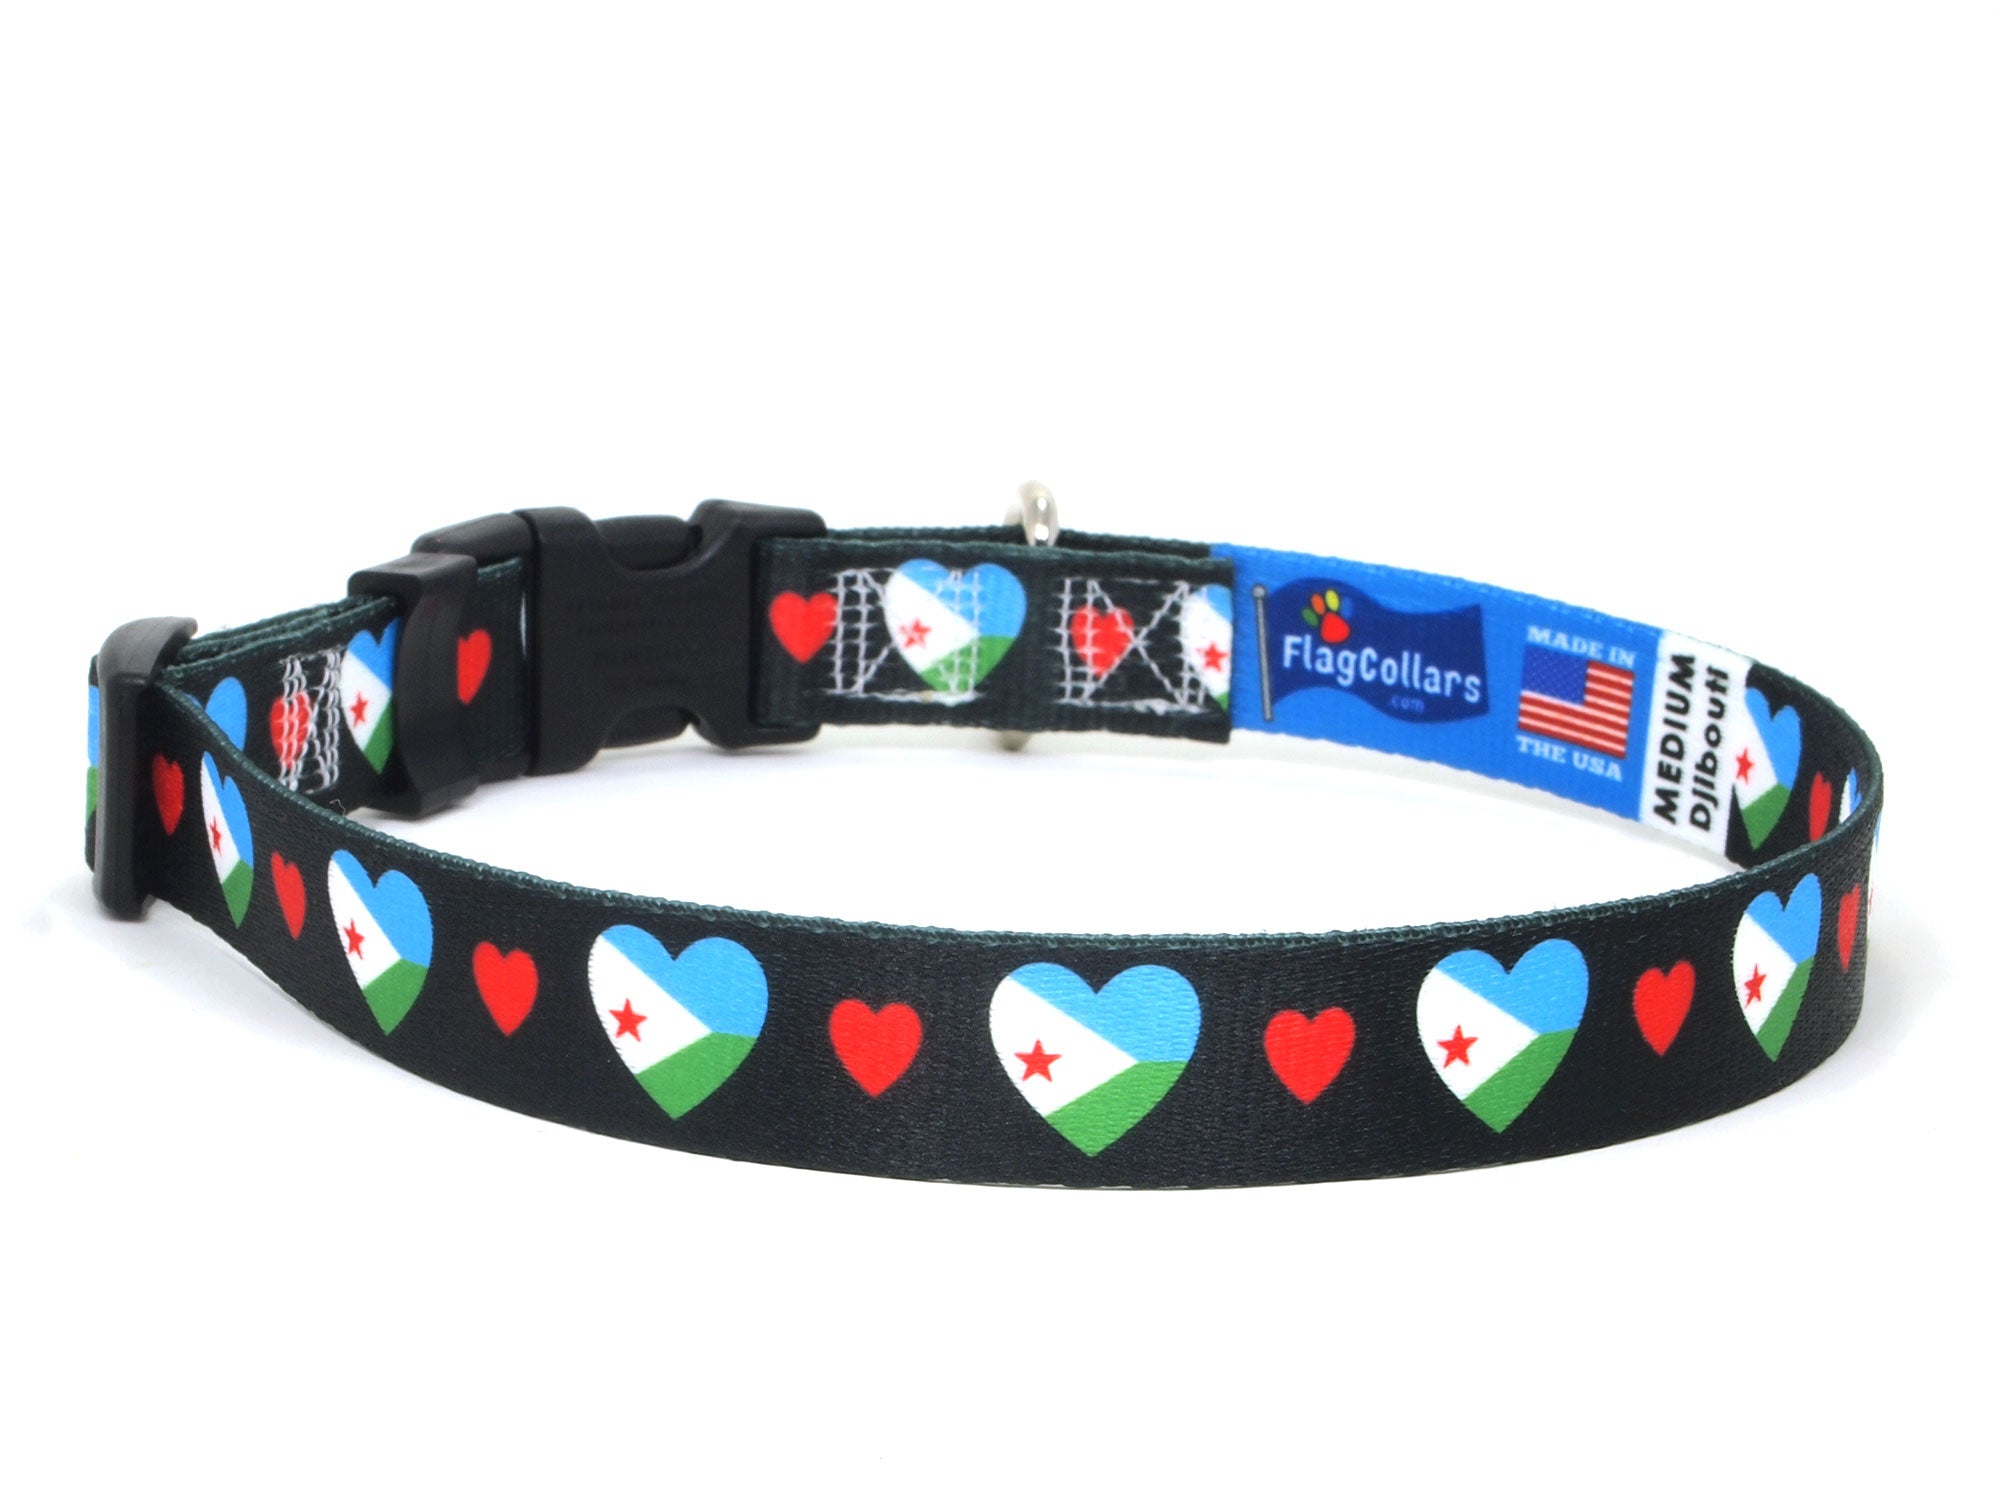 Dog Collar with Djibouti Hearts Pattern in black